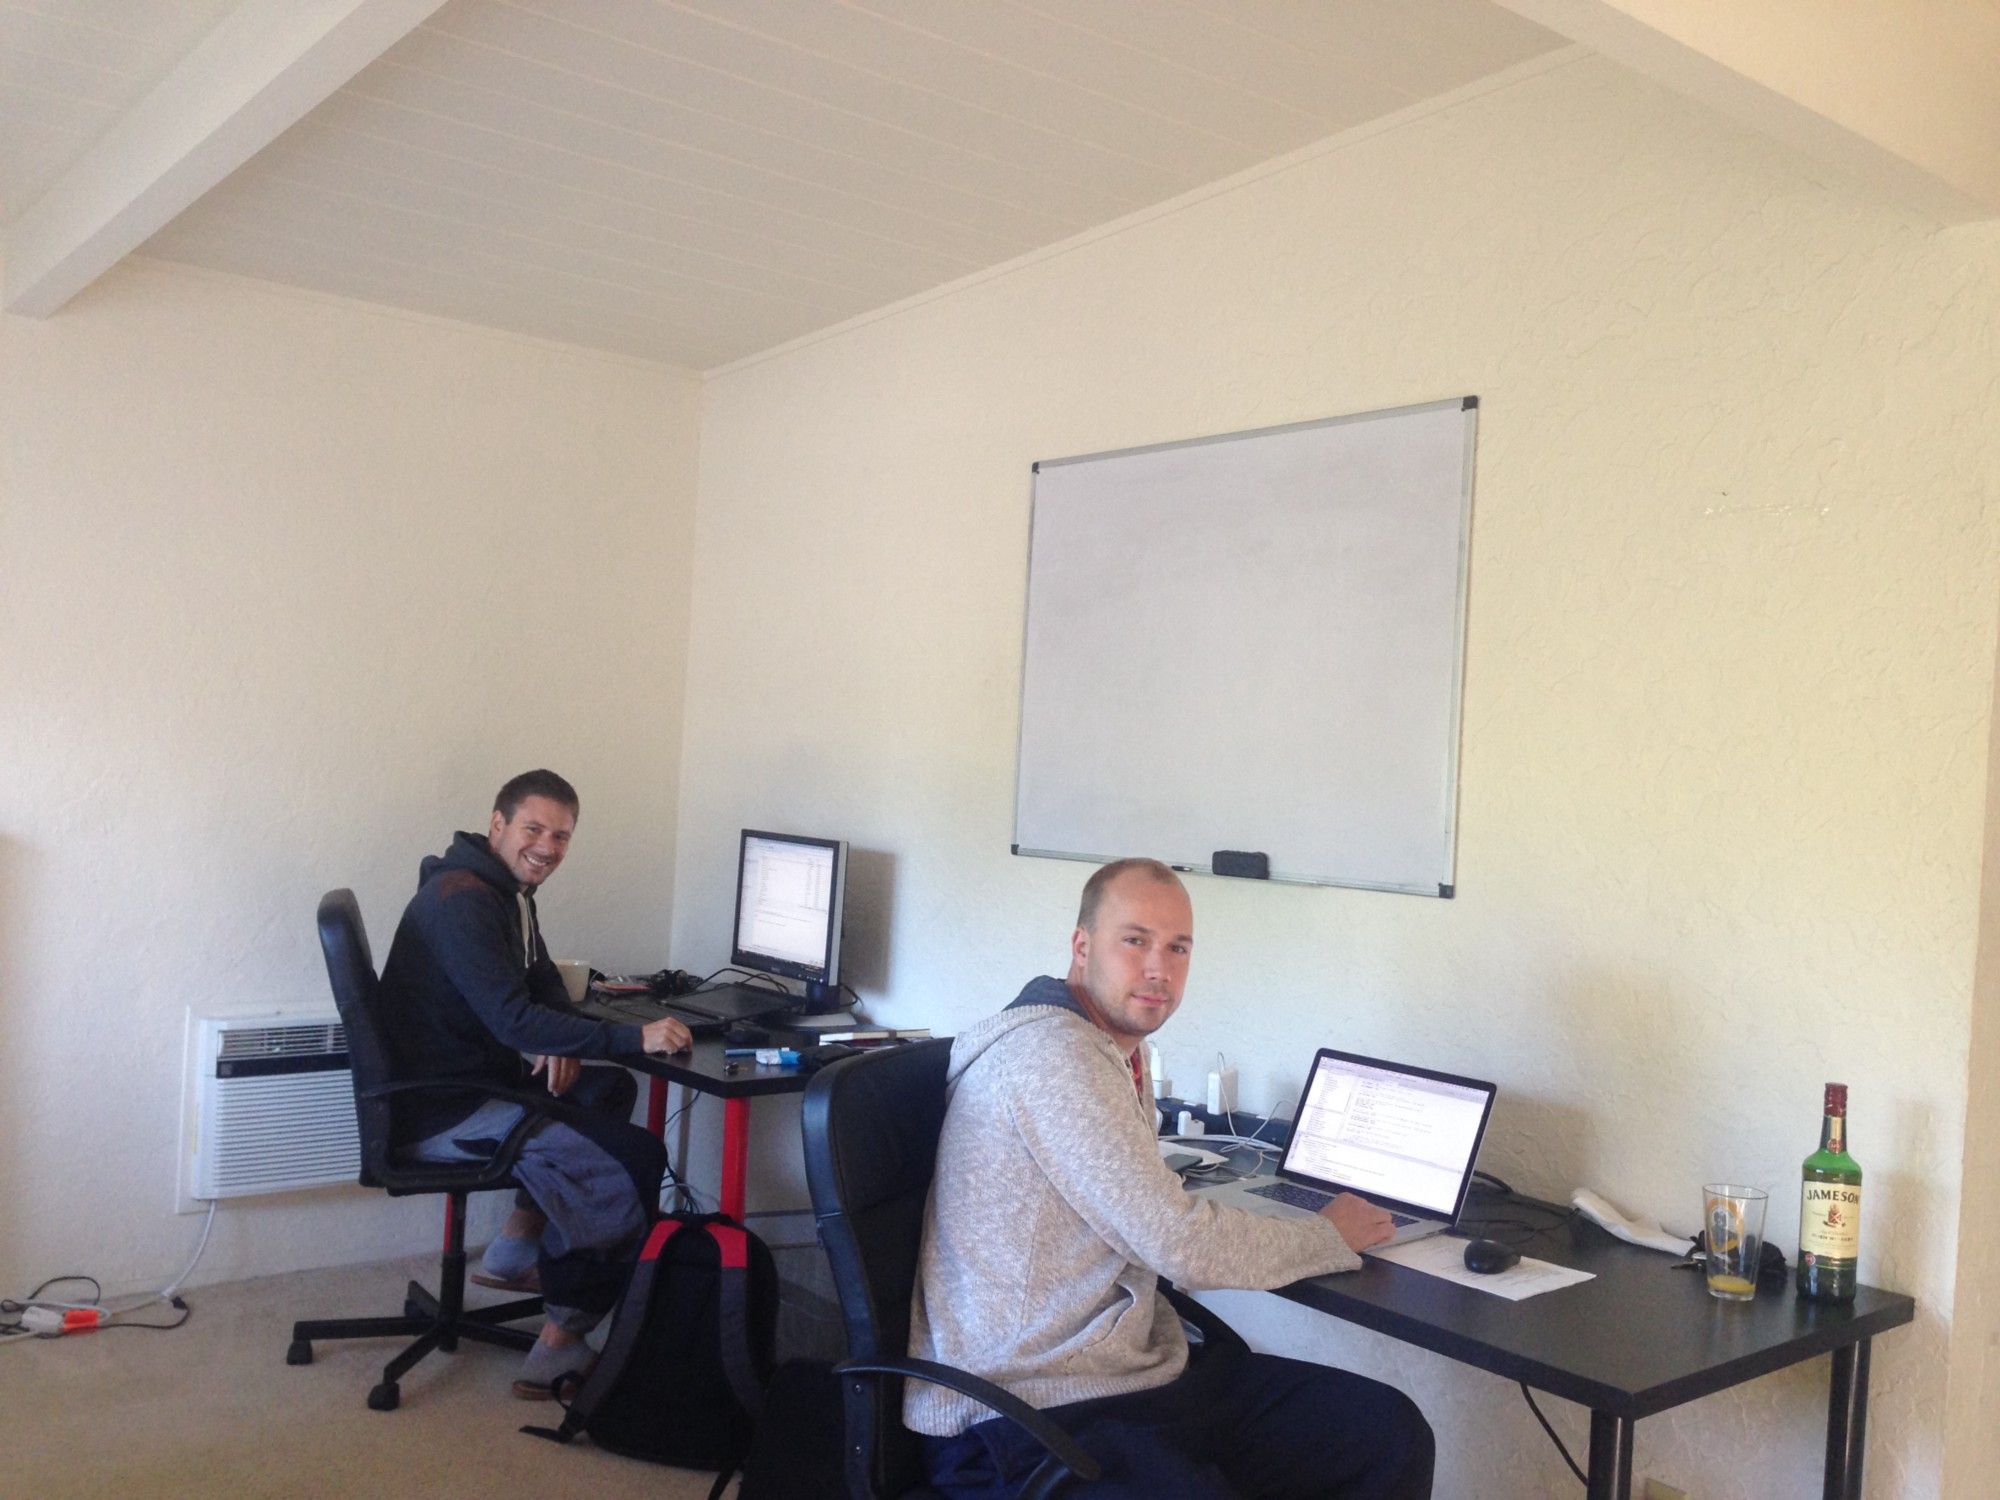 Jan and Jakub working in Hacker House